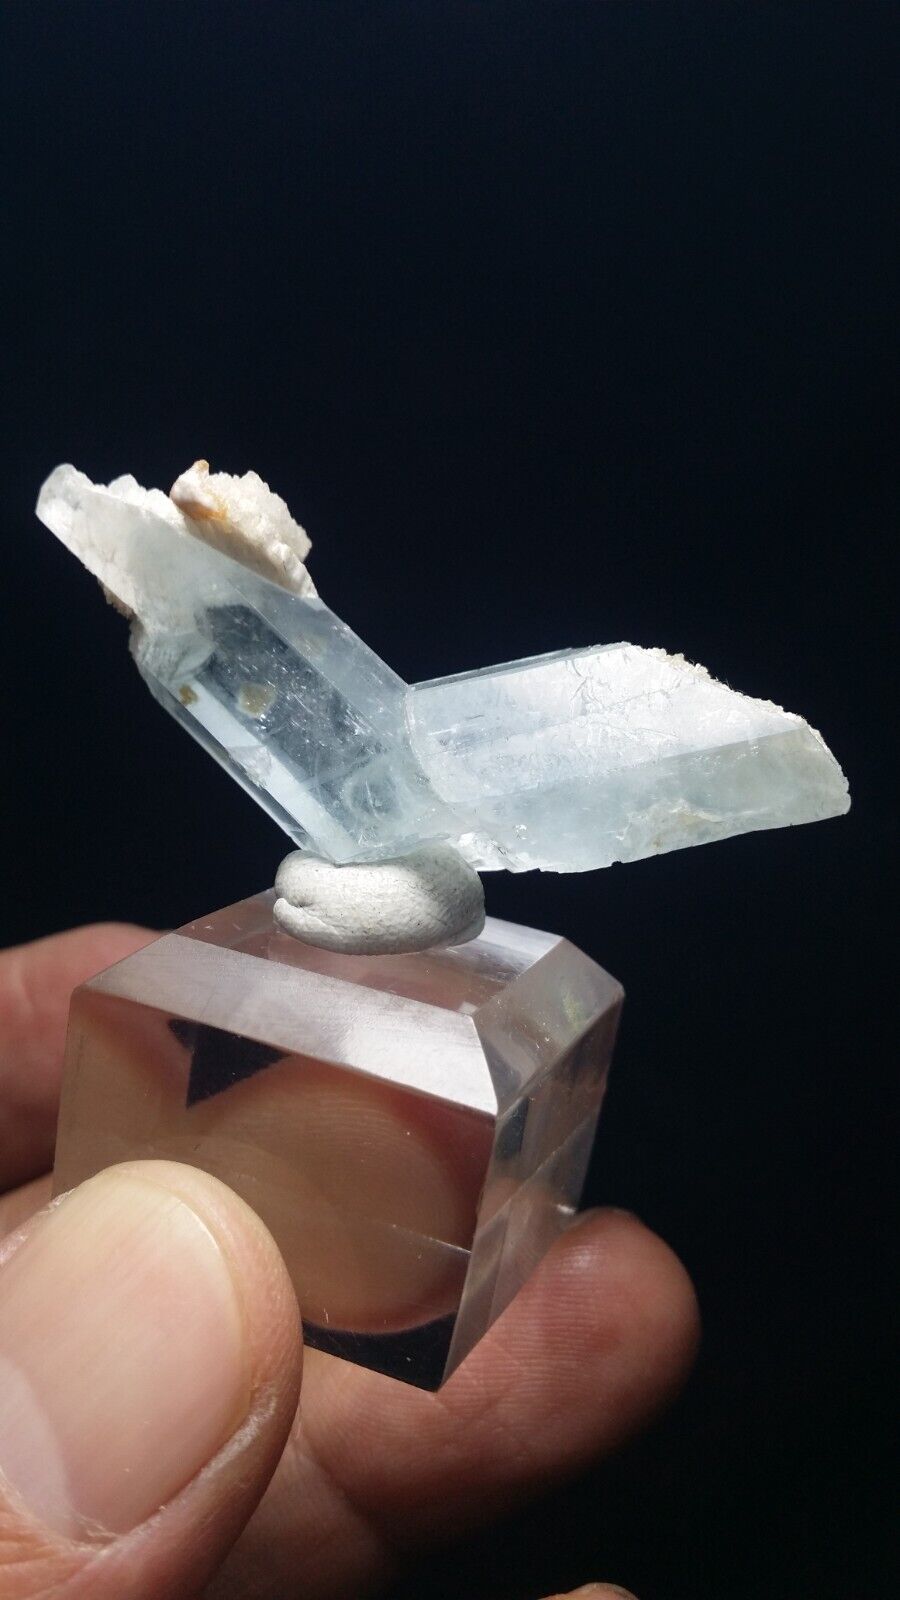 Exquisite Rare Beryllonite on V-Shaped Aquamarine Crystals - Shigar Valley